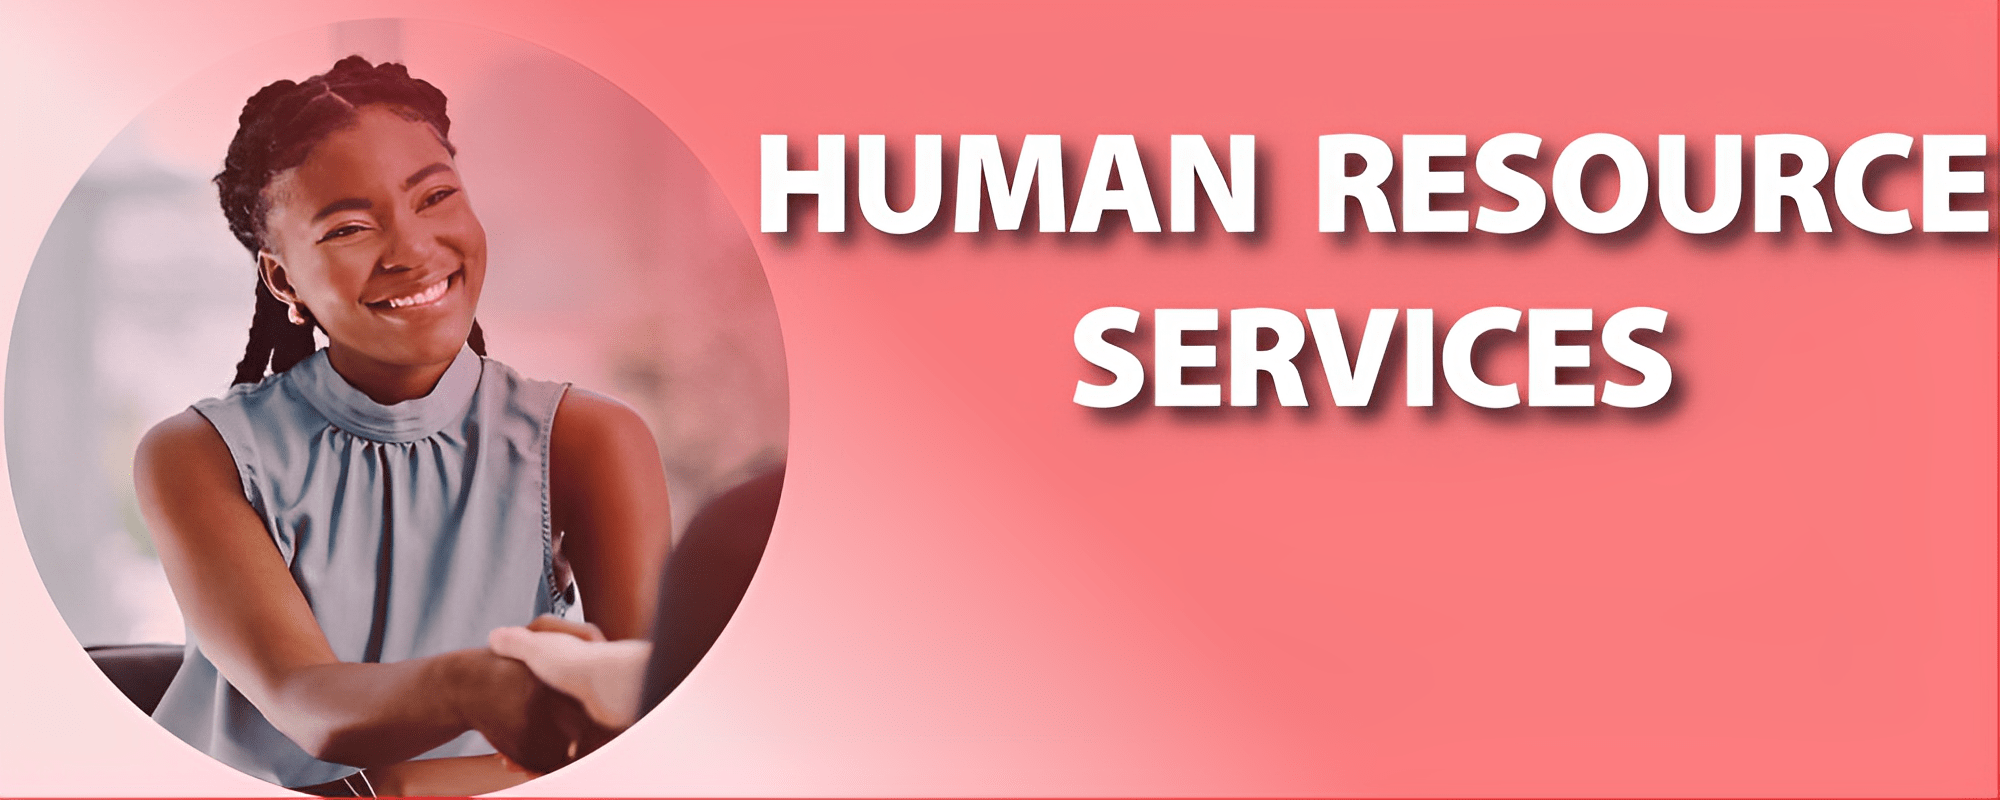 Human Resource Services in Uganda